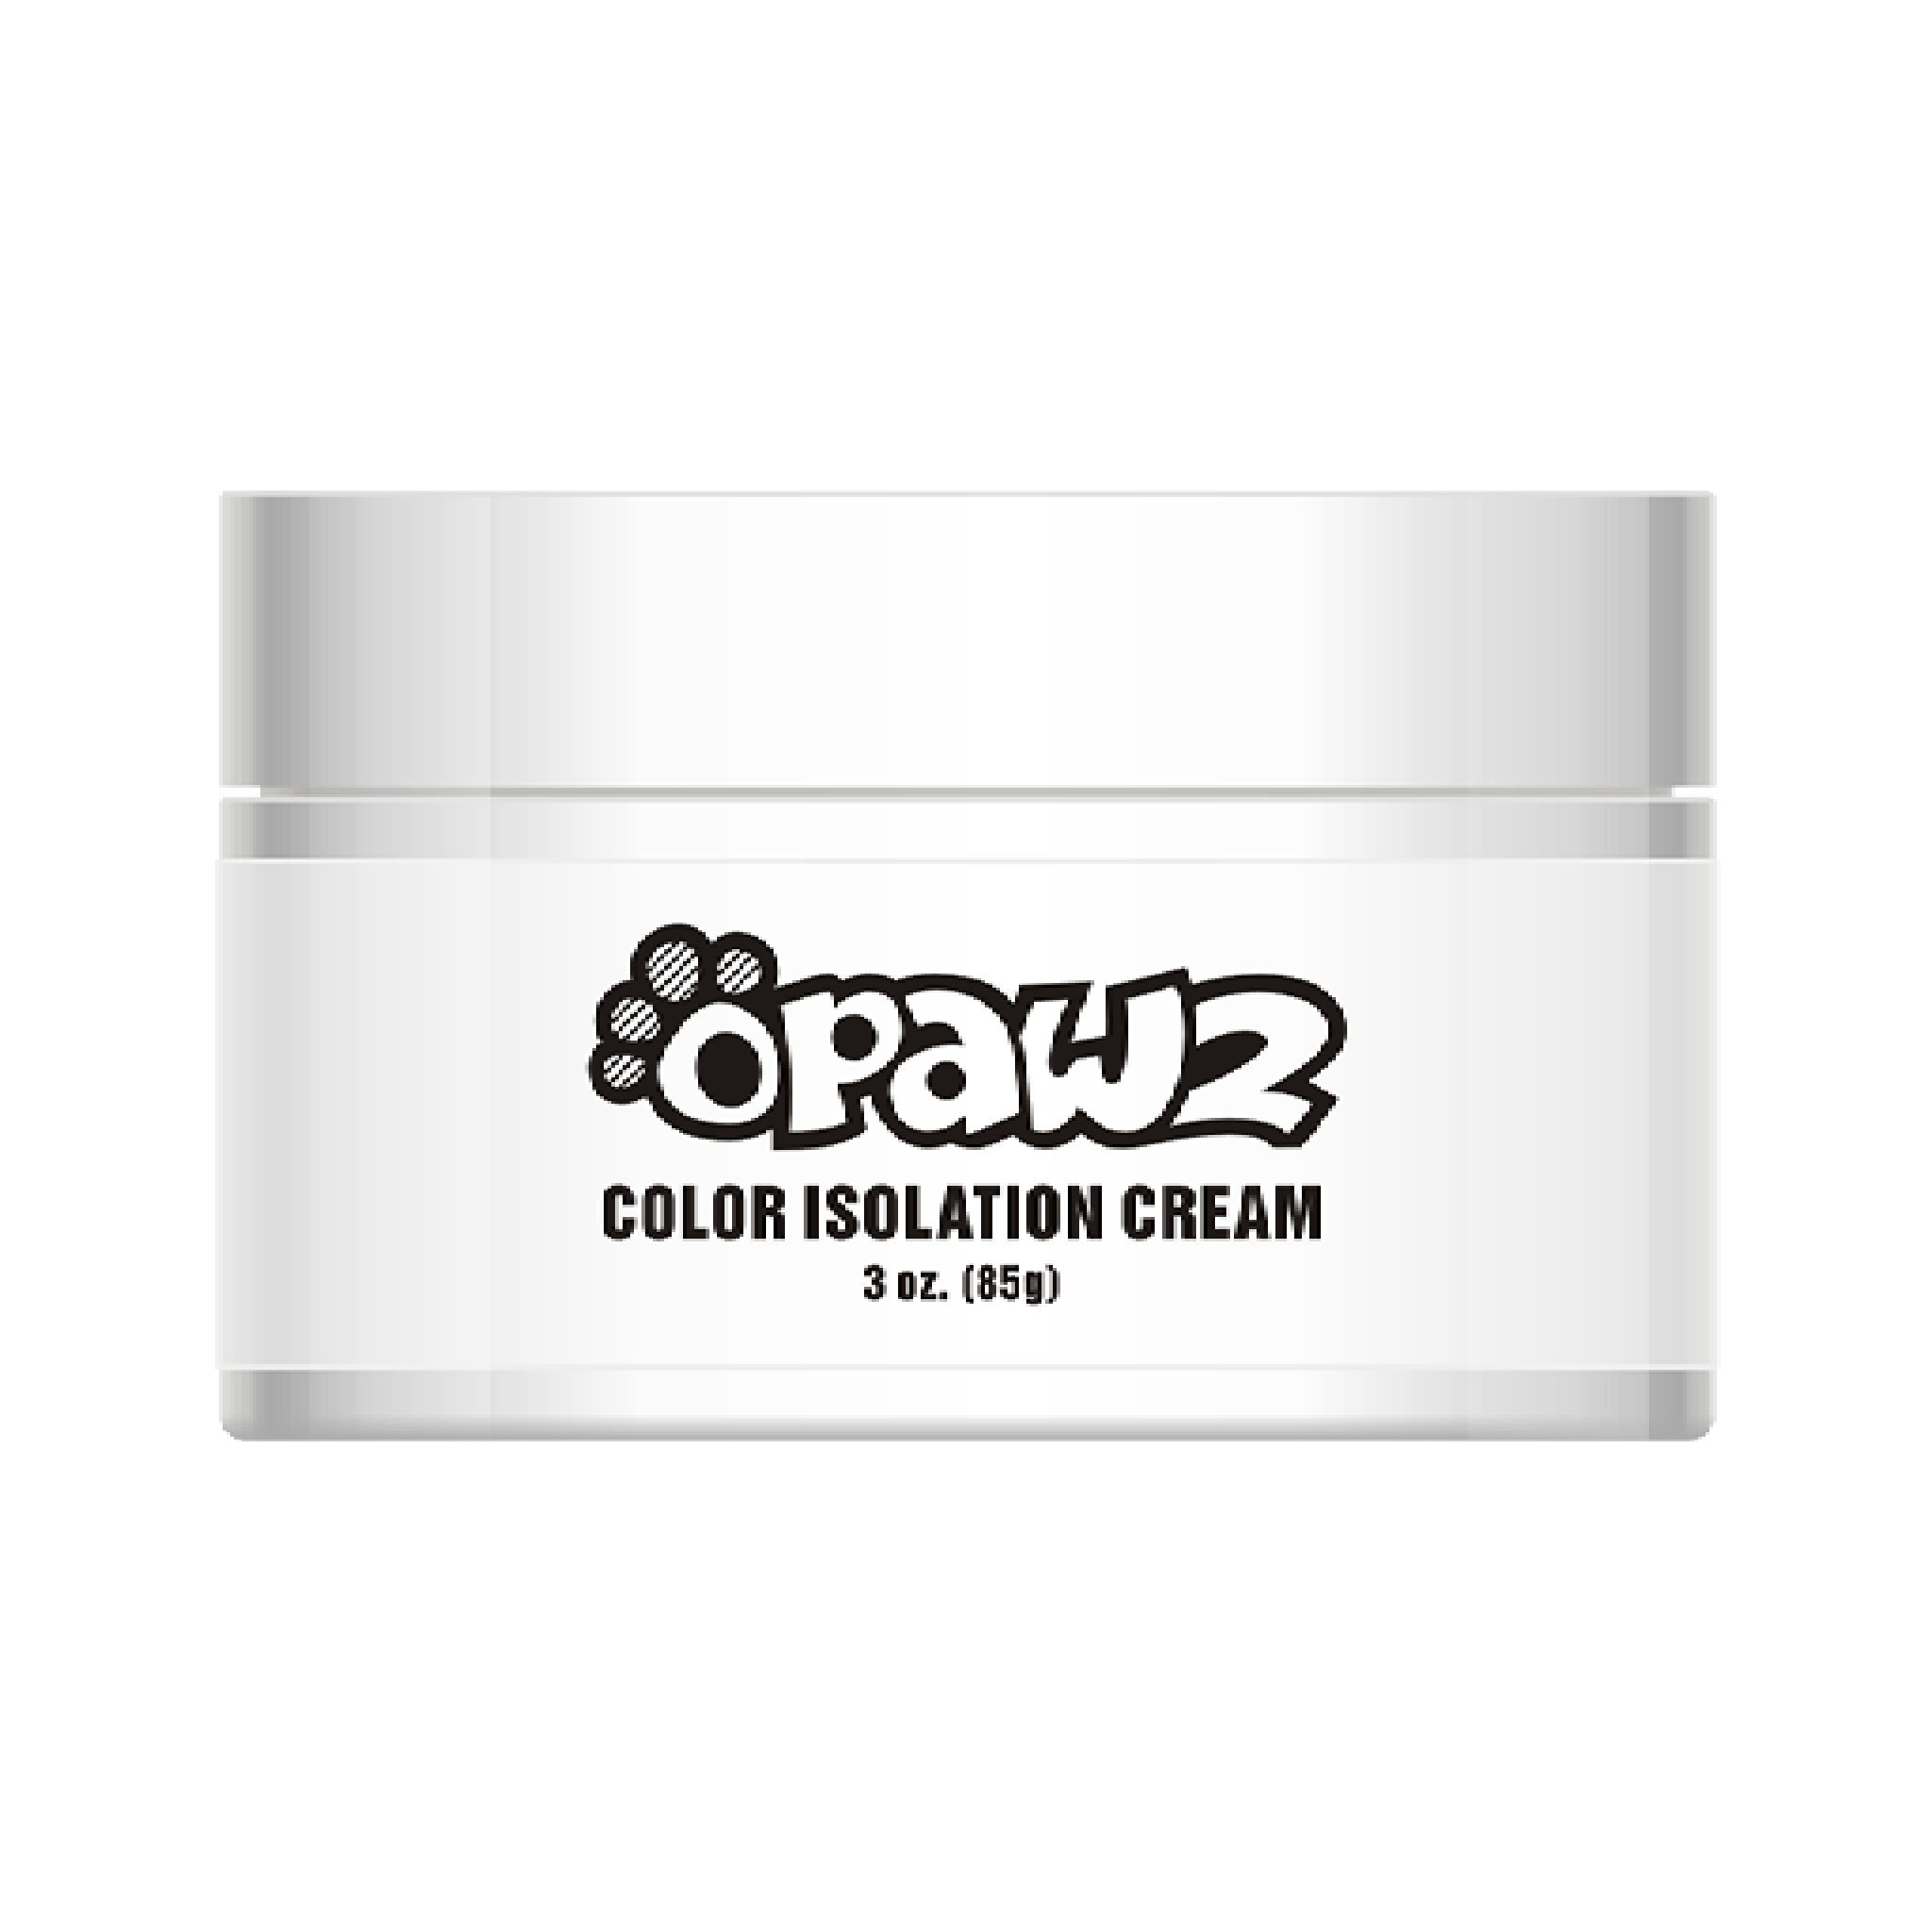 Opawz Pet Colour Isolation Cream, 85g